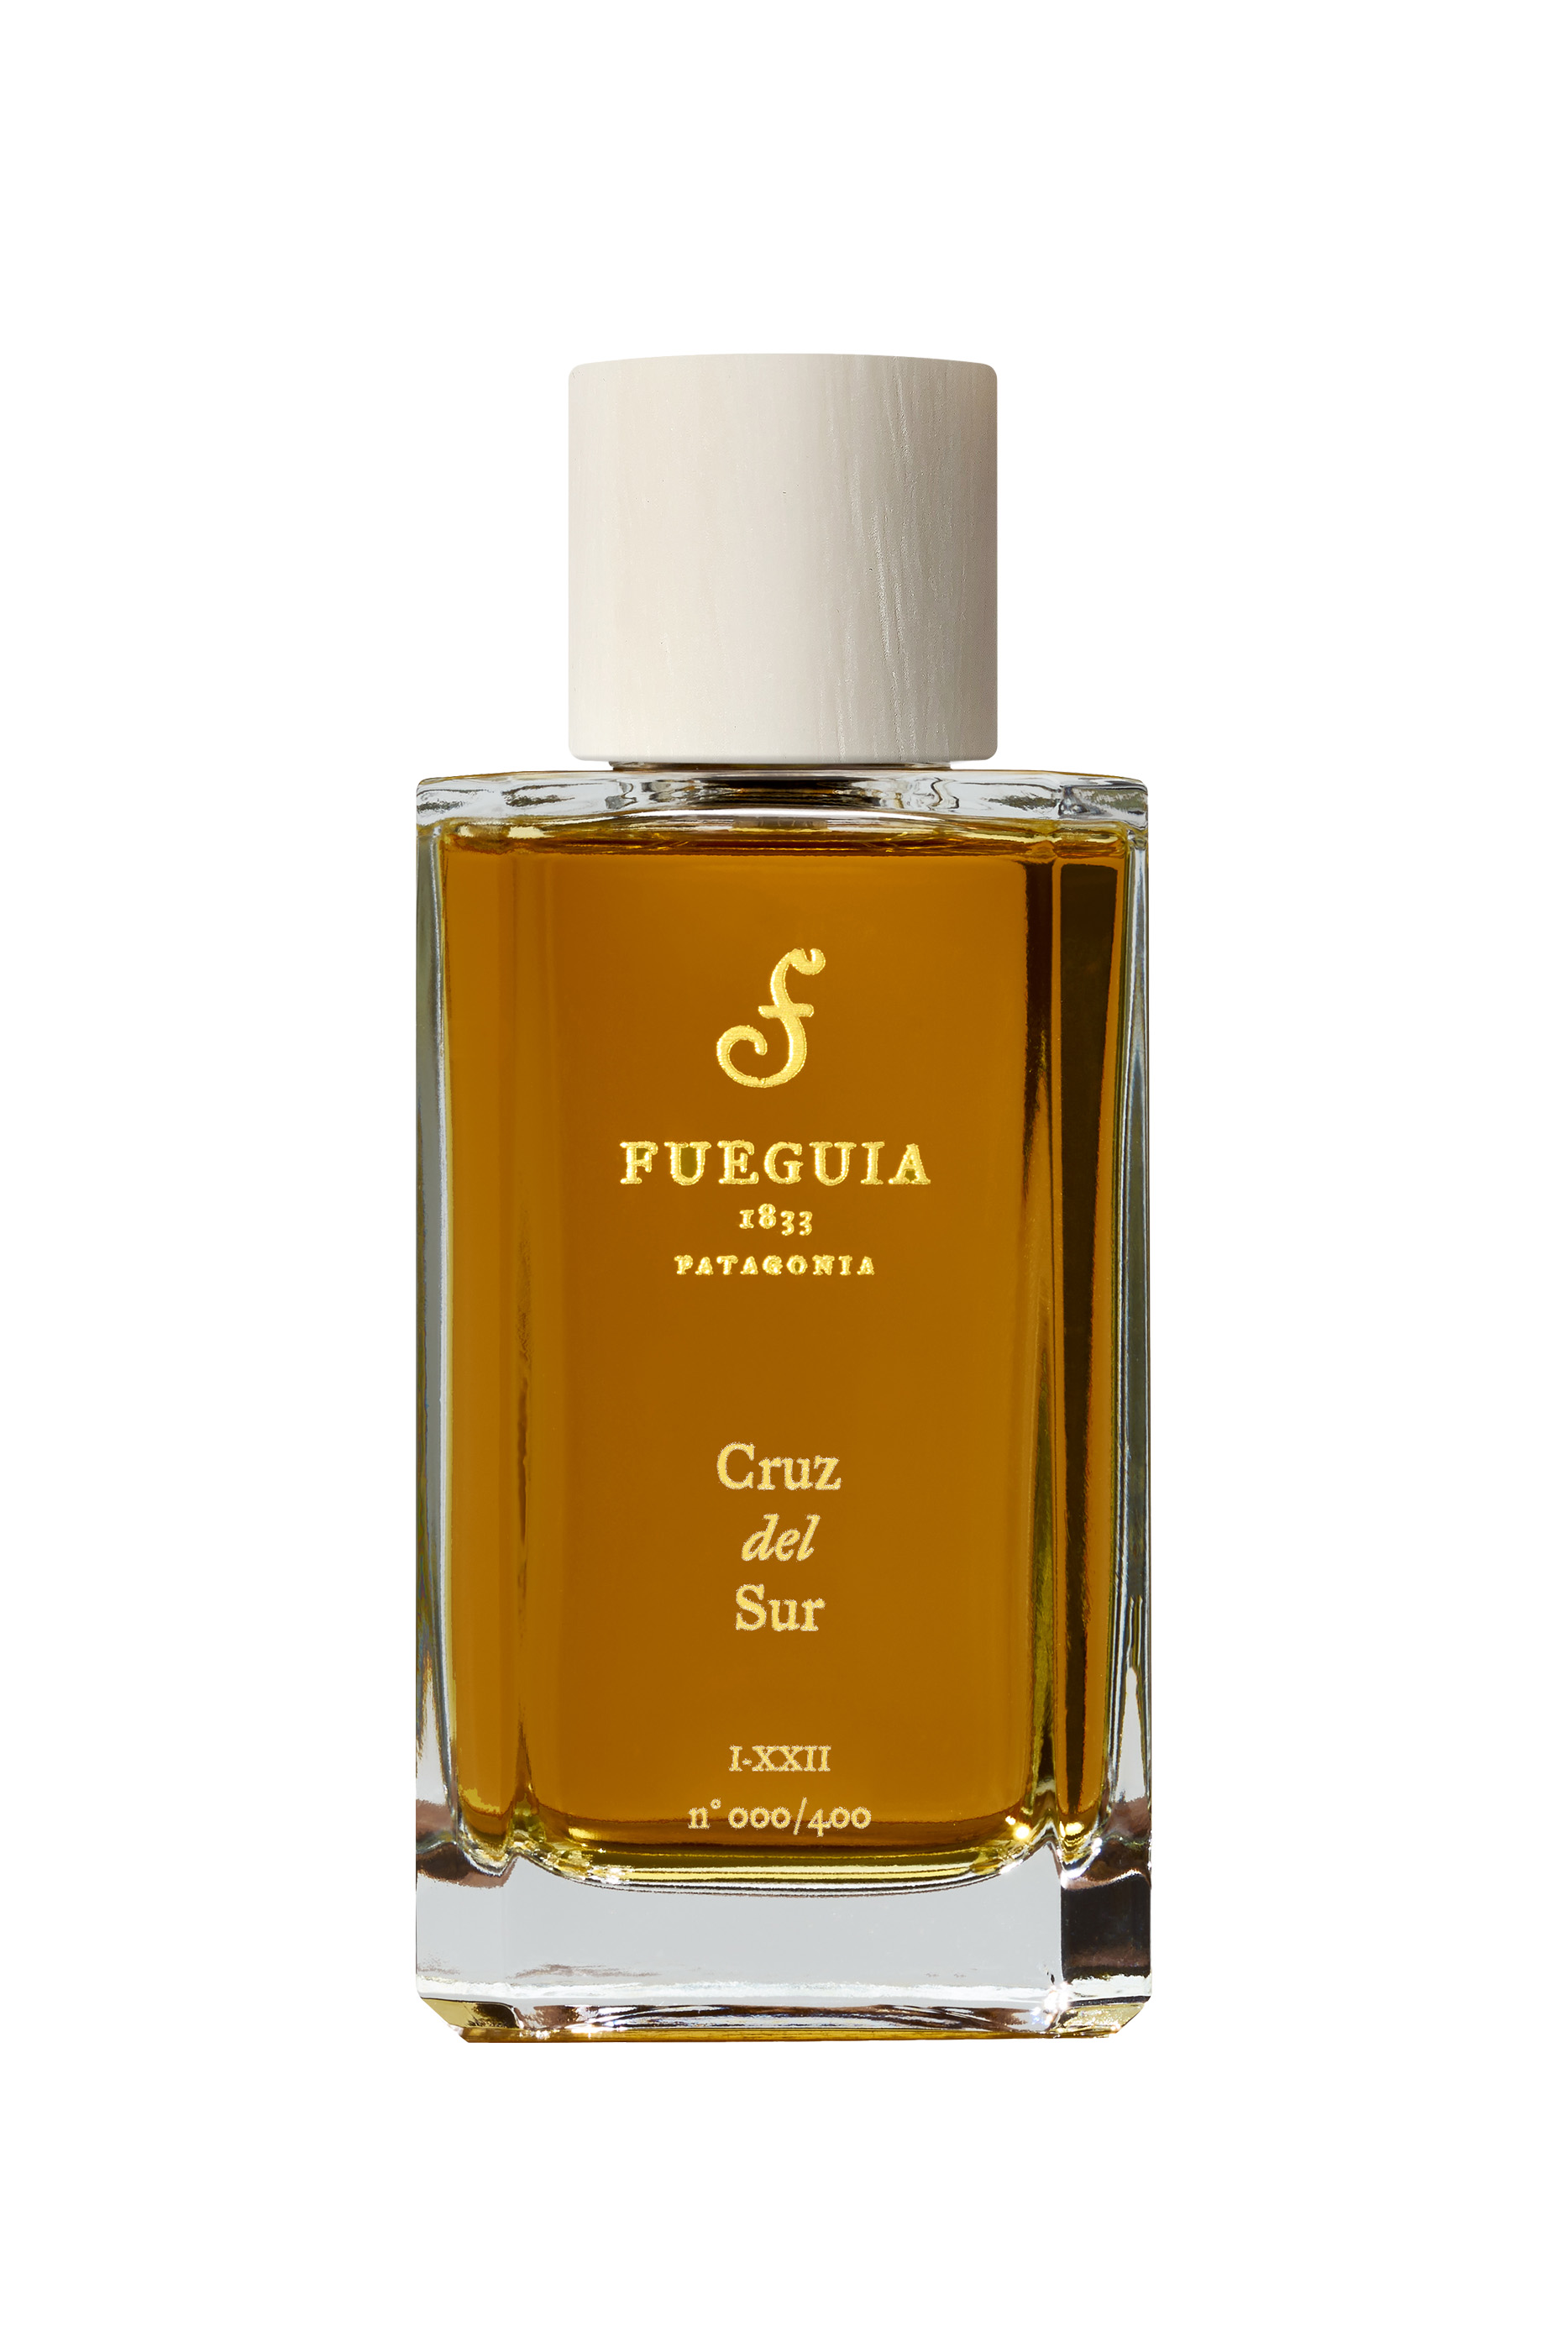 Buy Fueguia 1833 Cruz del Sur Perfume for | Bloomingdale's KSA